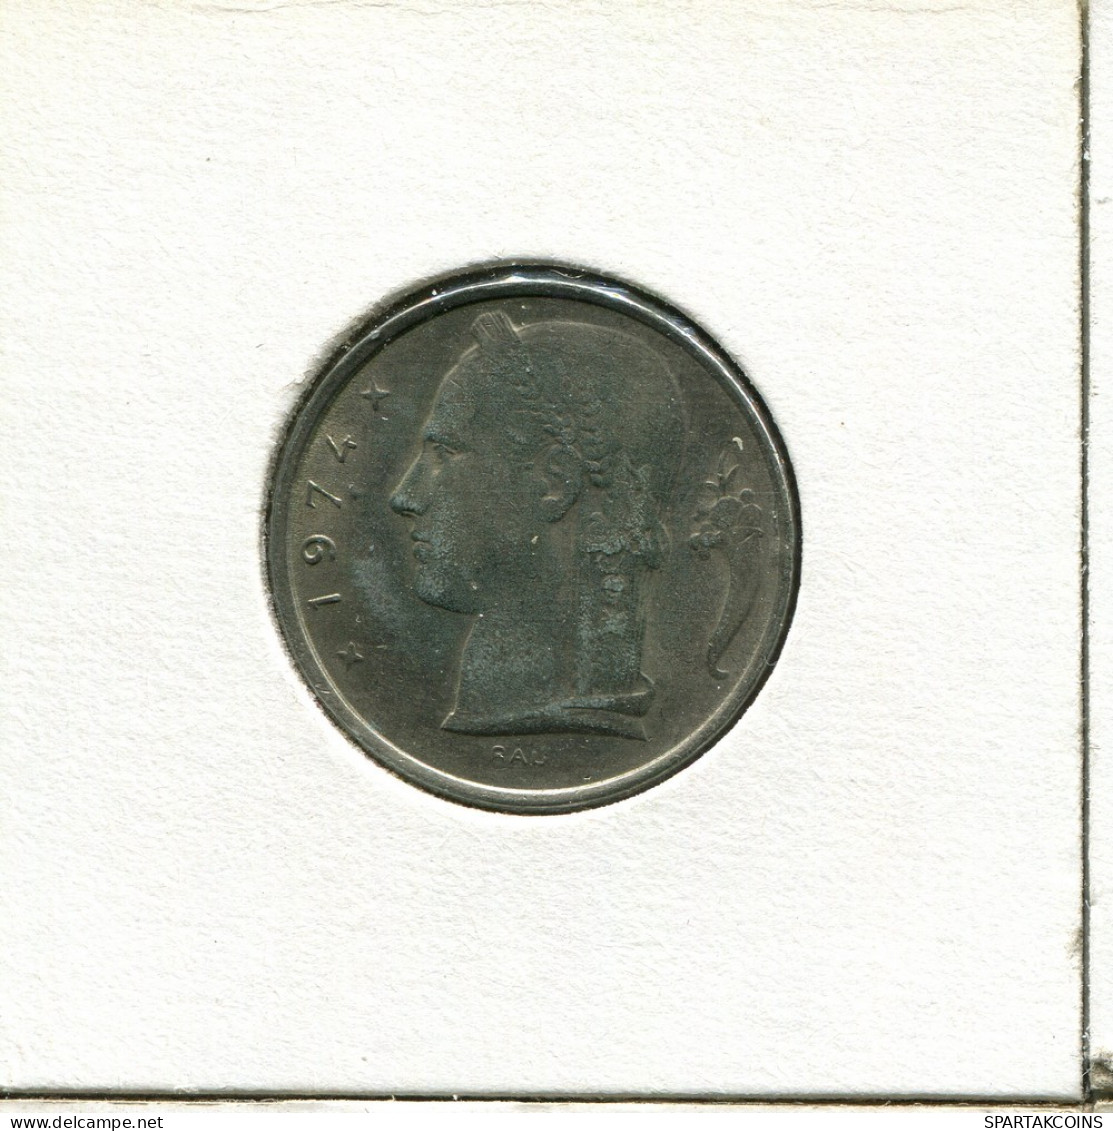 5 FRANCS 1974 FRENCH Text BELGIUM Coin #AU051.U.A - 5 Frank